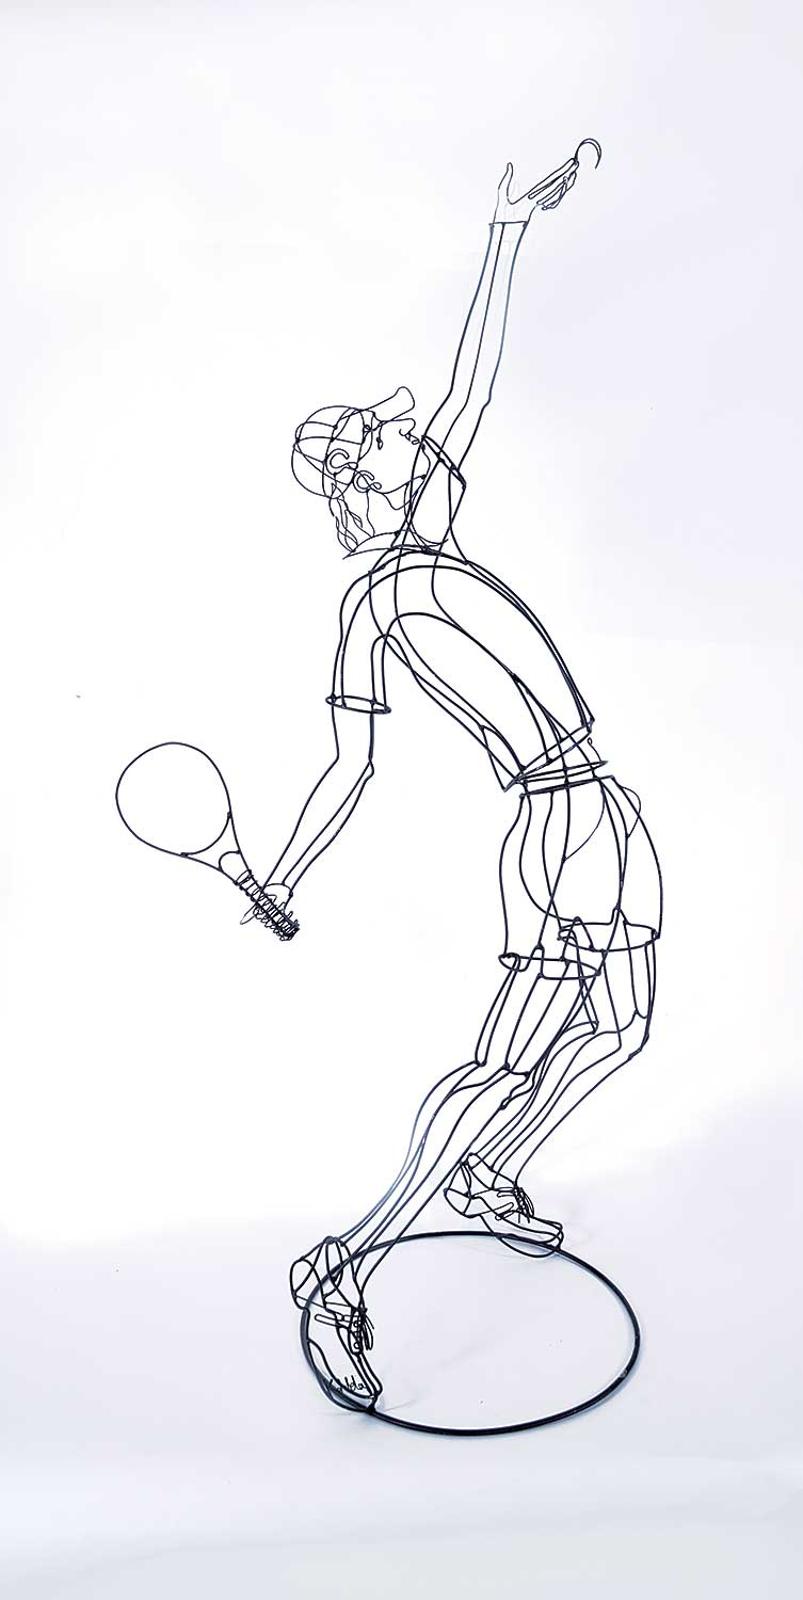 Rudy Kehkla (1950) - Untitled - Tennis Player